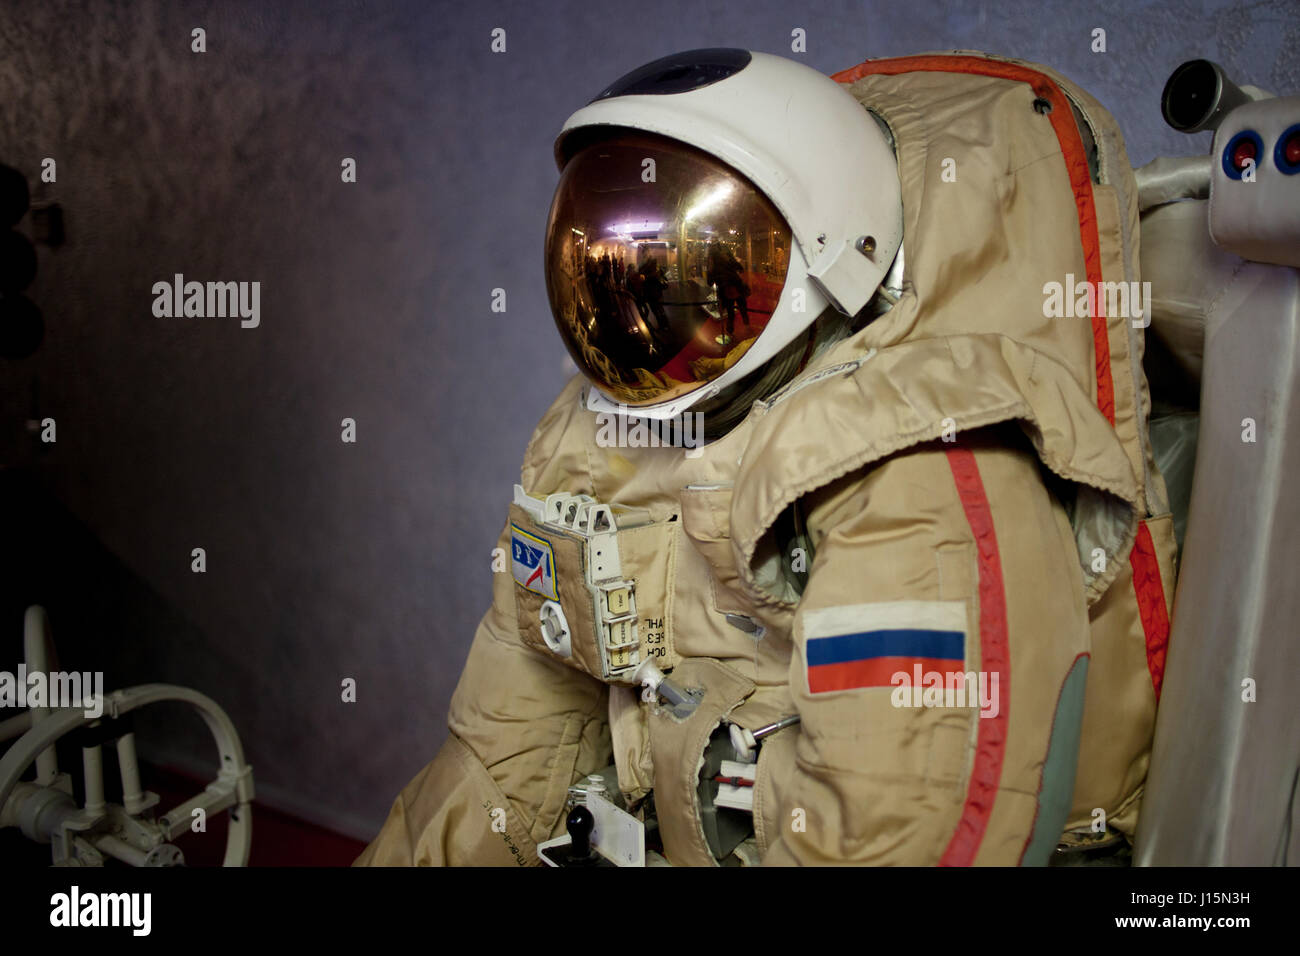 MOSCOW, RUSSIA - SEPTEMBER 6, 2015: Soviet cosmonaut dummy in the suit, Museum of cosmonautics Stock Photo